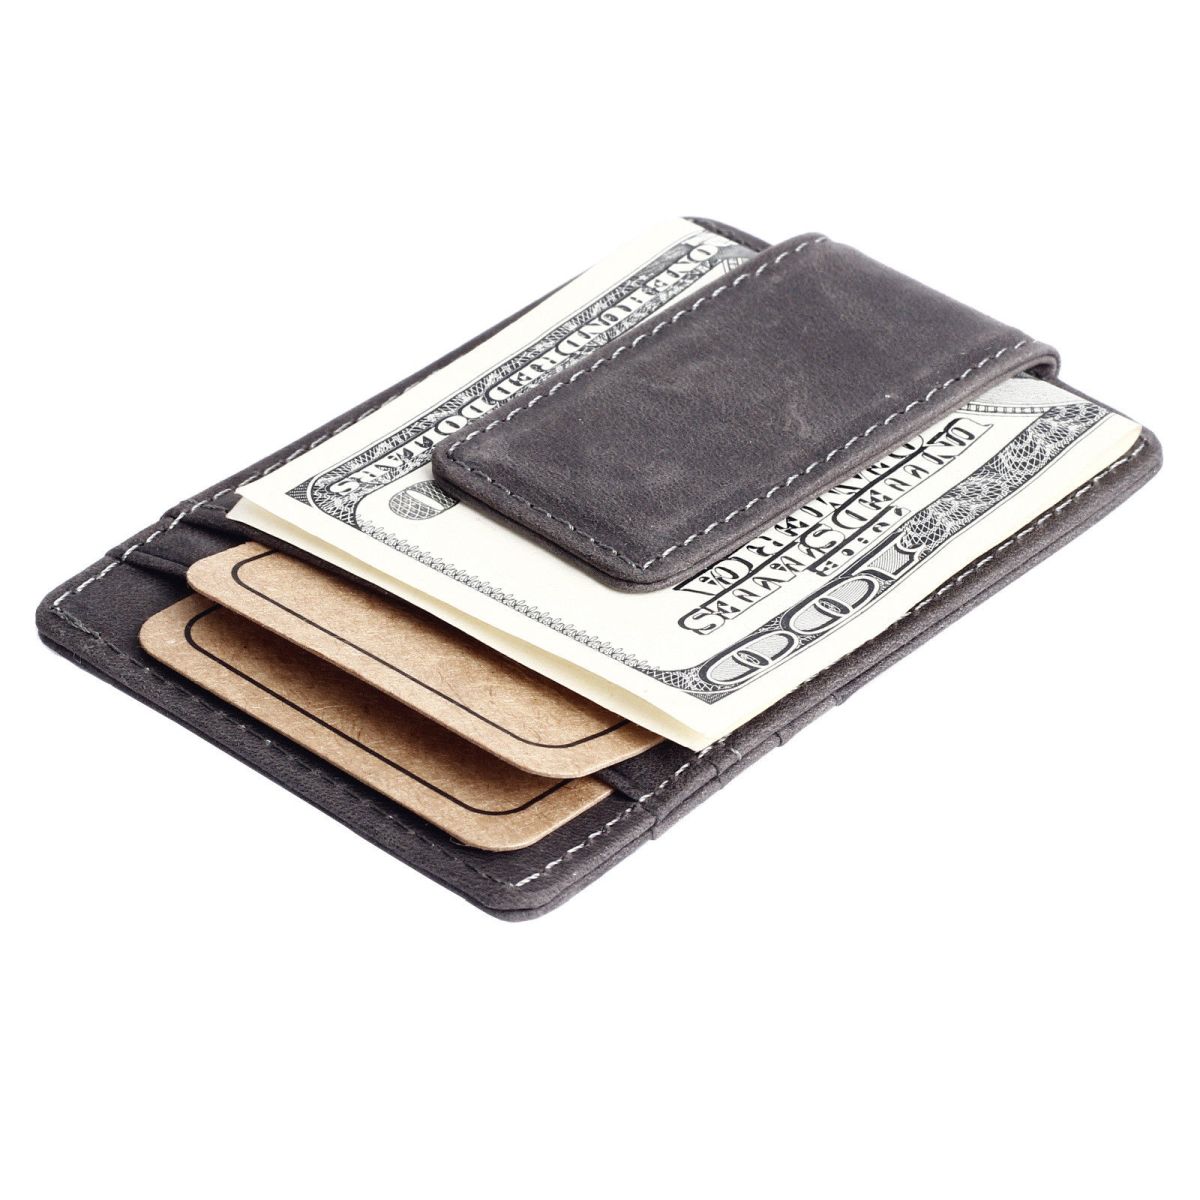 WALLET Leather Money Clip Wallet - Black